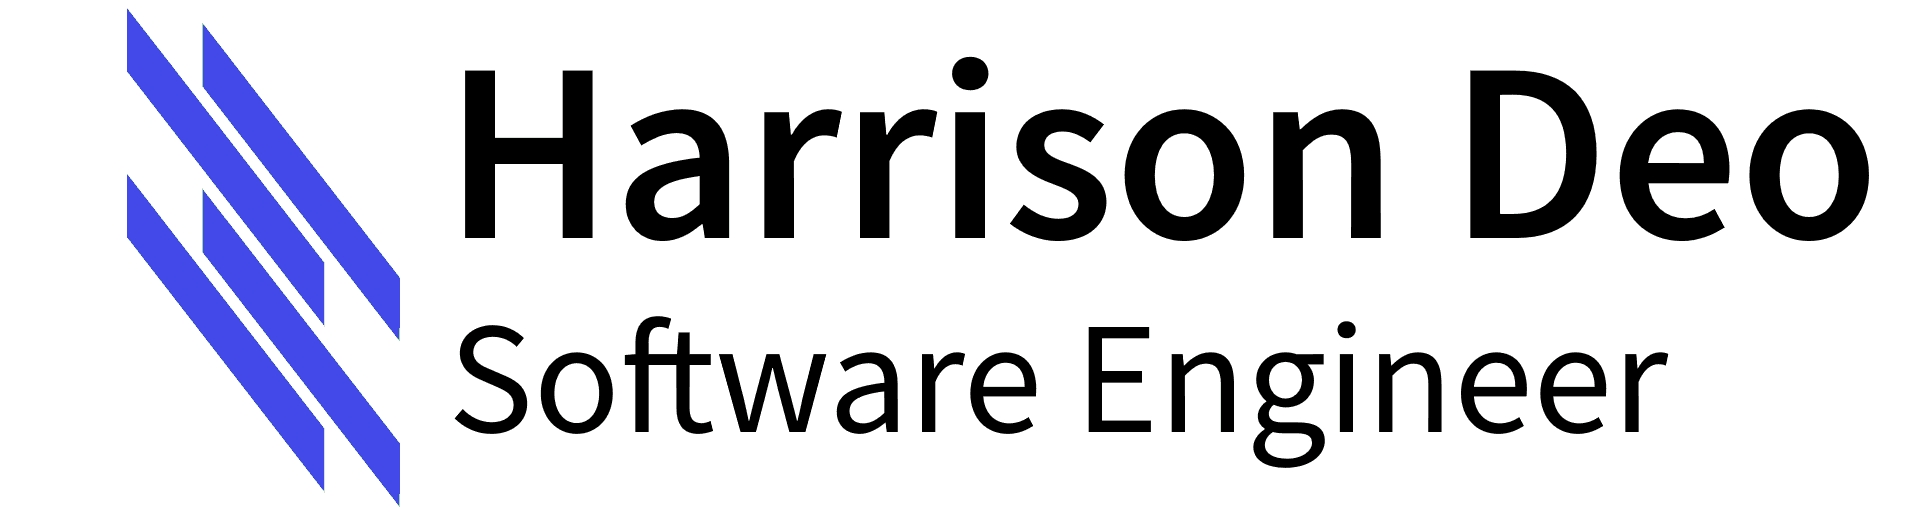 Harrison Deo, Software Engineer Logo